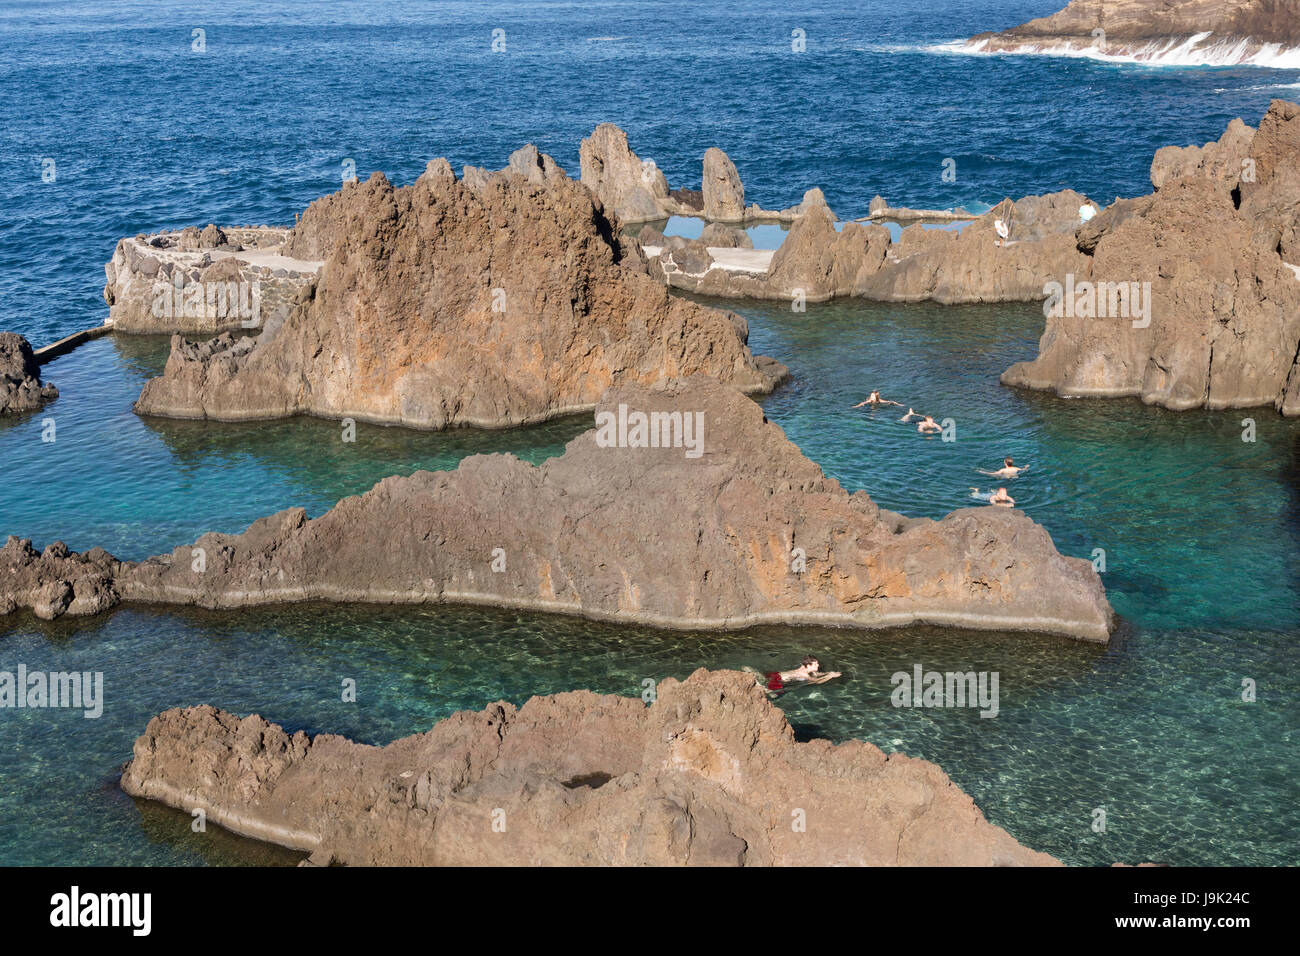 People swimming in the natural rock pools - Piscinas Naturais - at Porto Moniz, Madeira Stock Photo